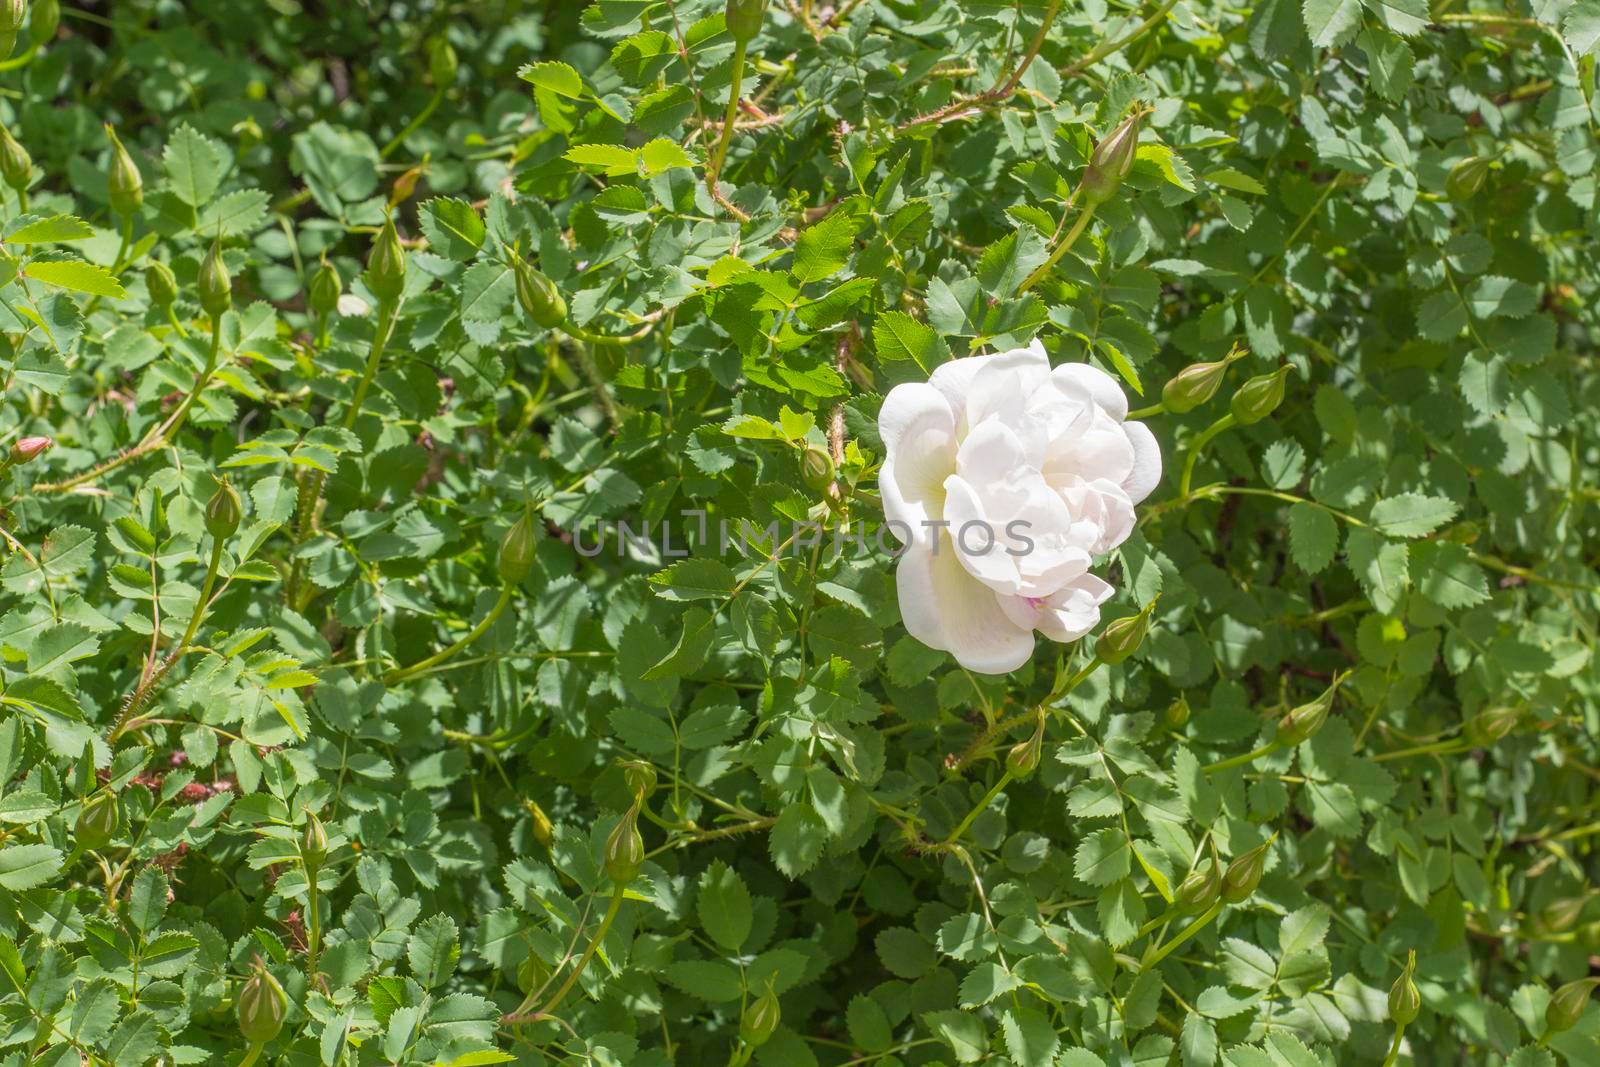 White Rose, Green Shrub of Dog Rose, Single Flower in Horizontal Pattern of Nature Image.